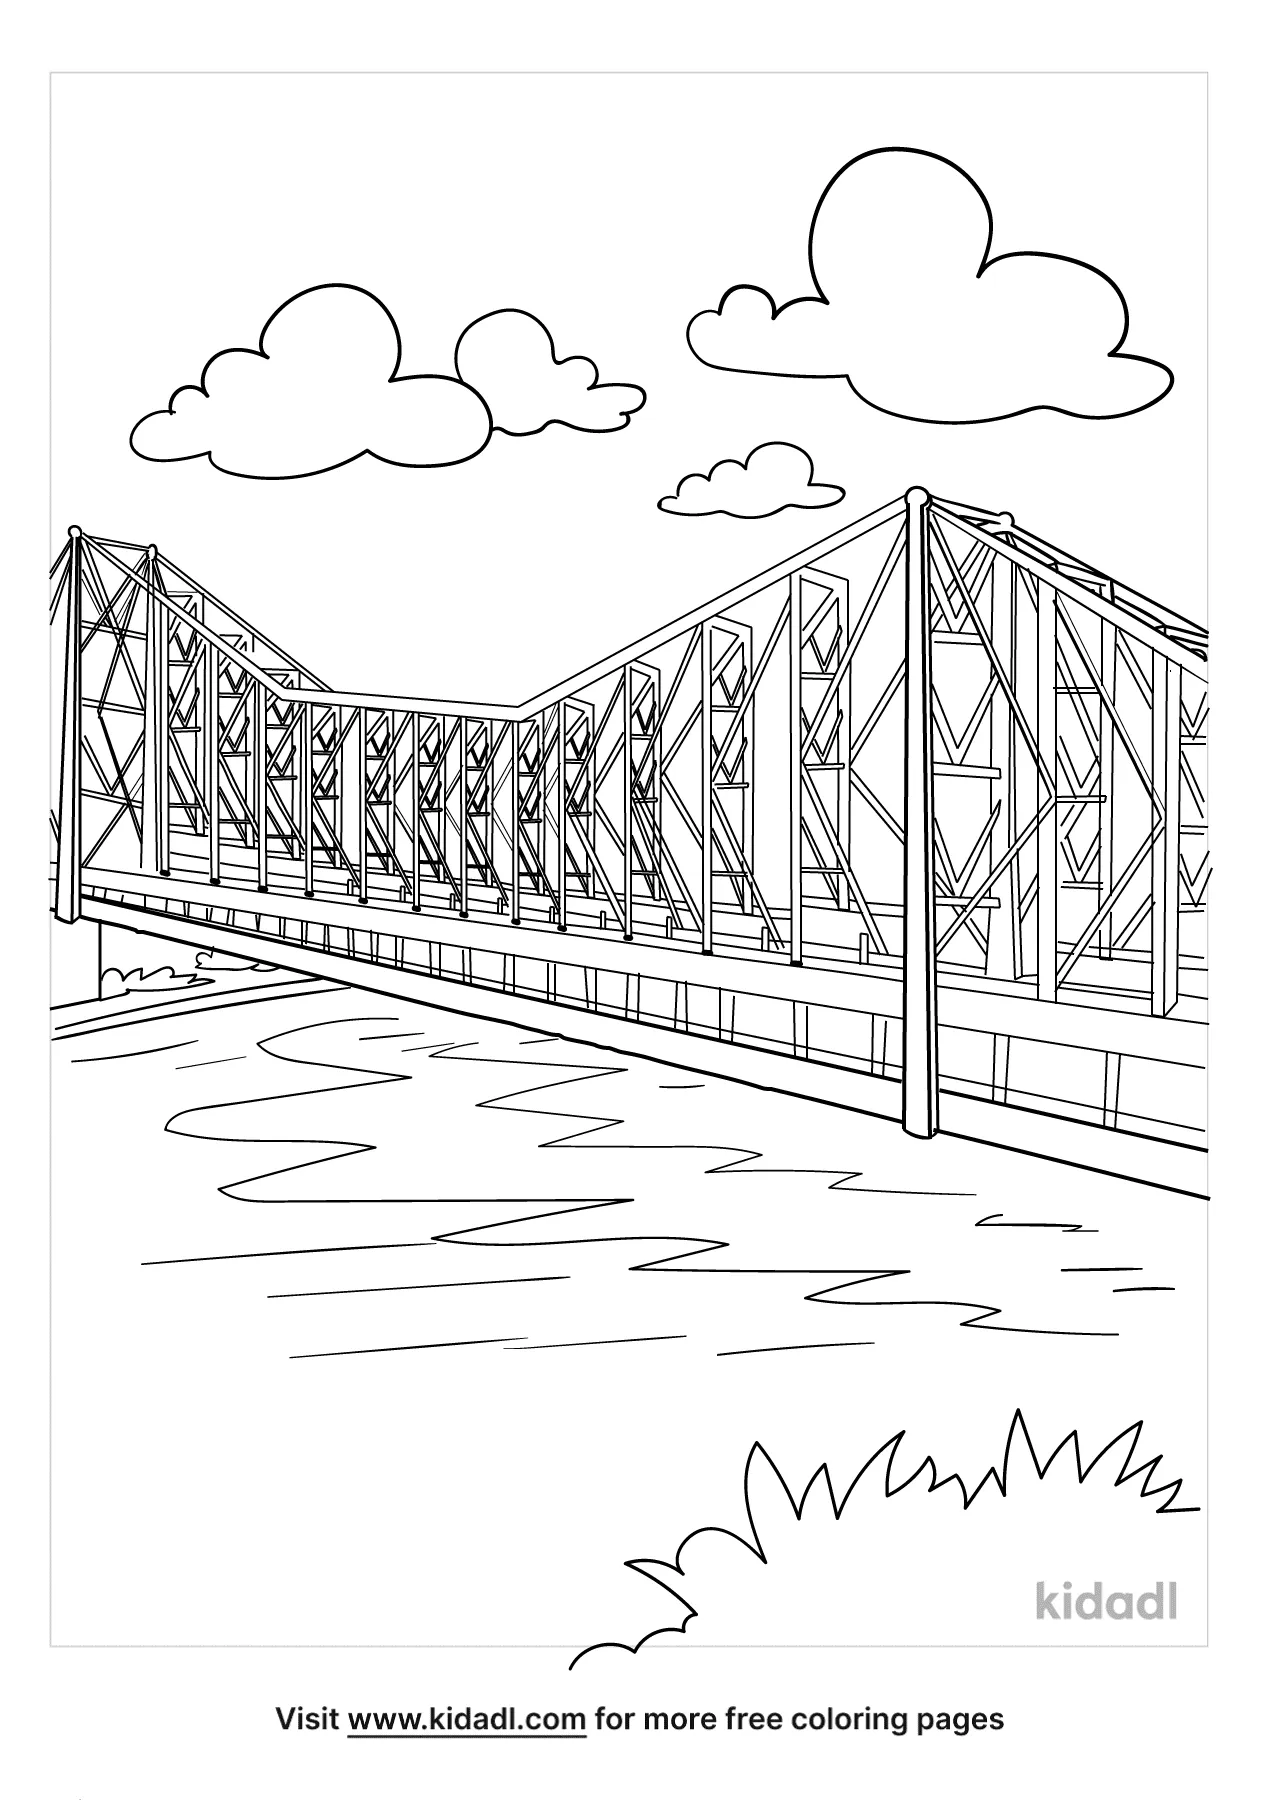 Free Detailed Bridge Coloring Page | Coloring Page Printables | Kidadl